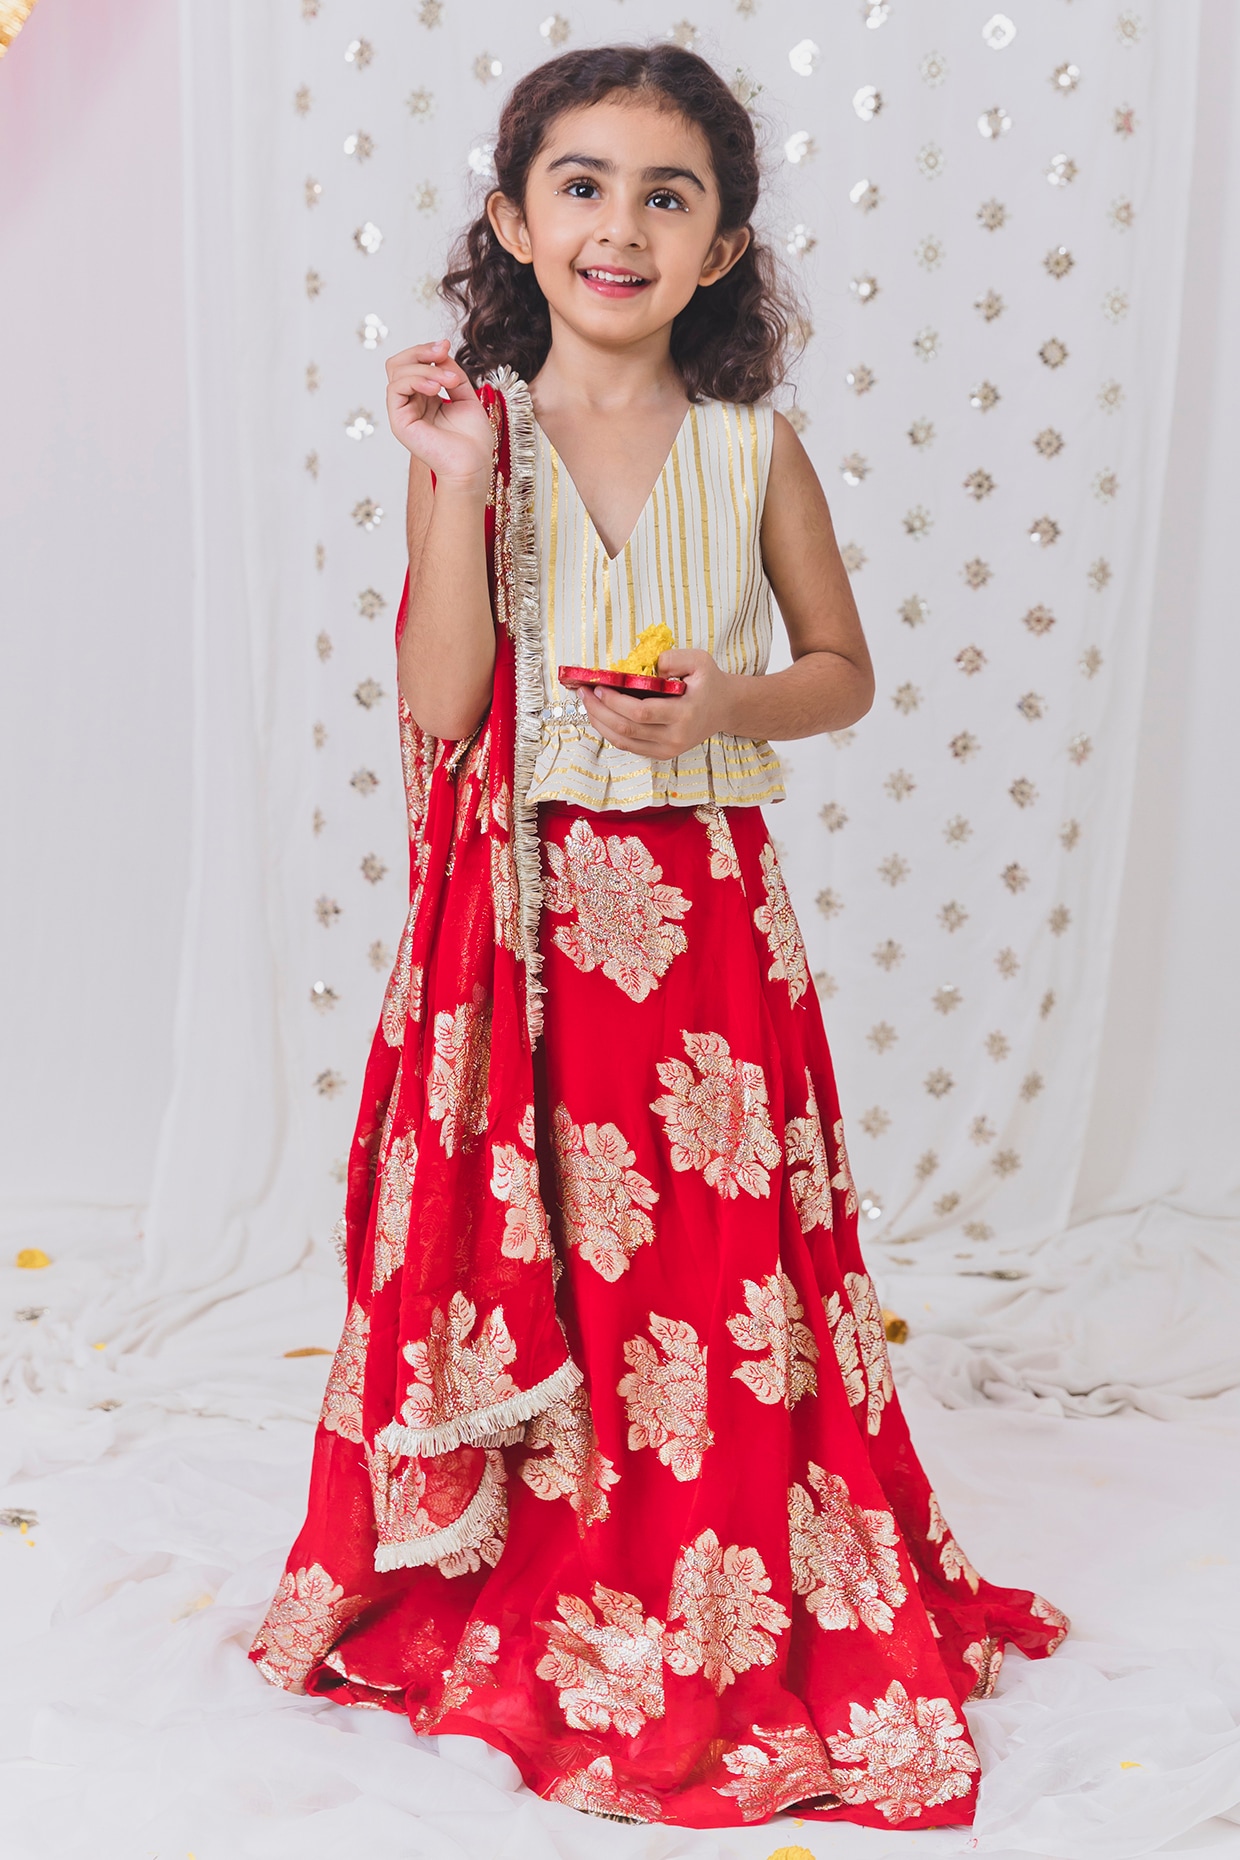 Tan & Red Color Pattu Langa Blouse For Teens & Kids, Girls Indian Wear  #19028 | Buy Online @ DesiClik.com, USA